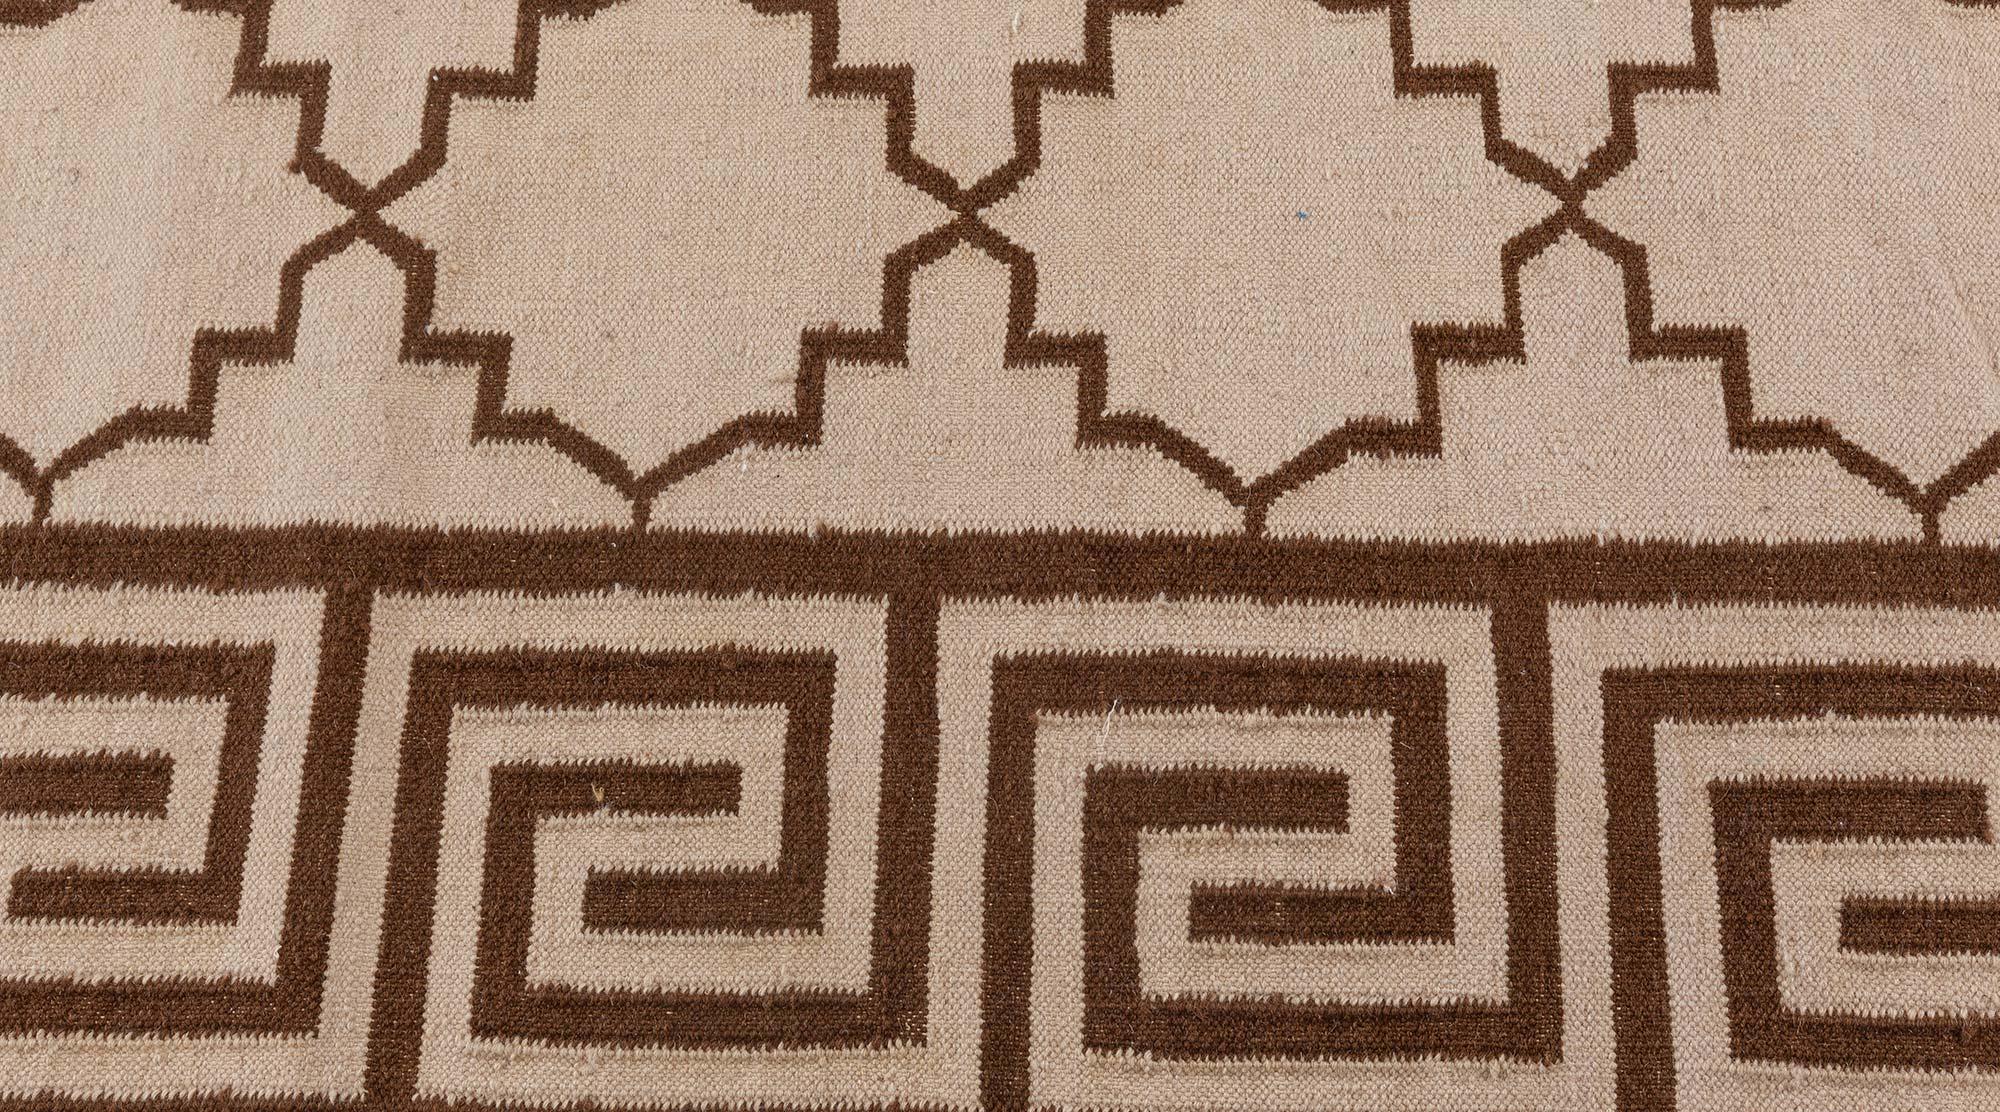 Vintage Indian Dhurrie rug
Size: 12'2